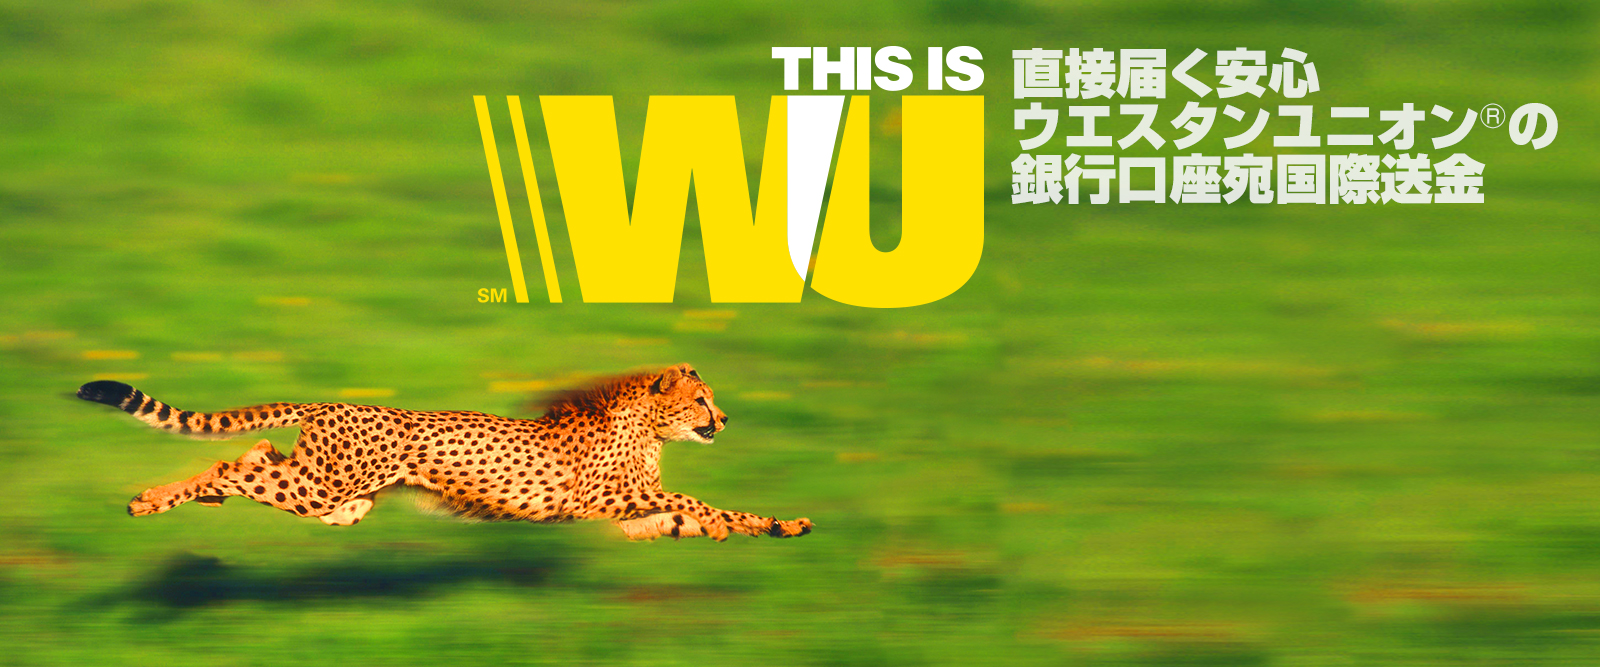 THIS IS WU 直接届く安心ウエスタンユニオン®の銀行口座宛国際送金